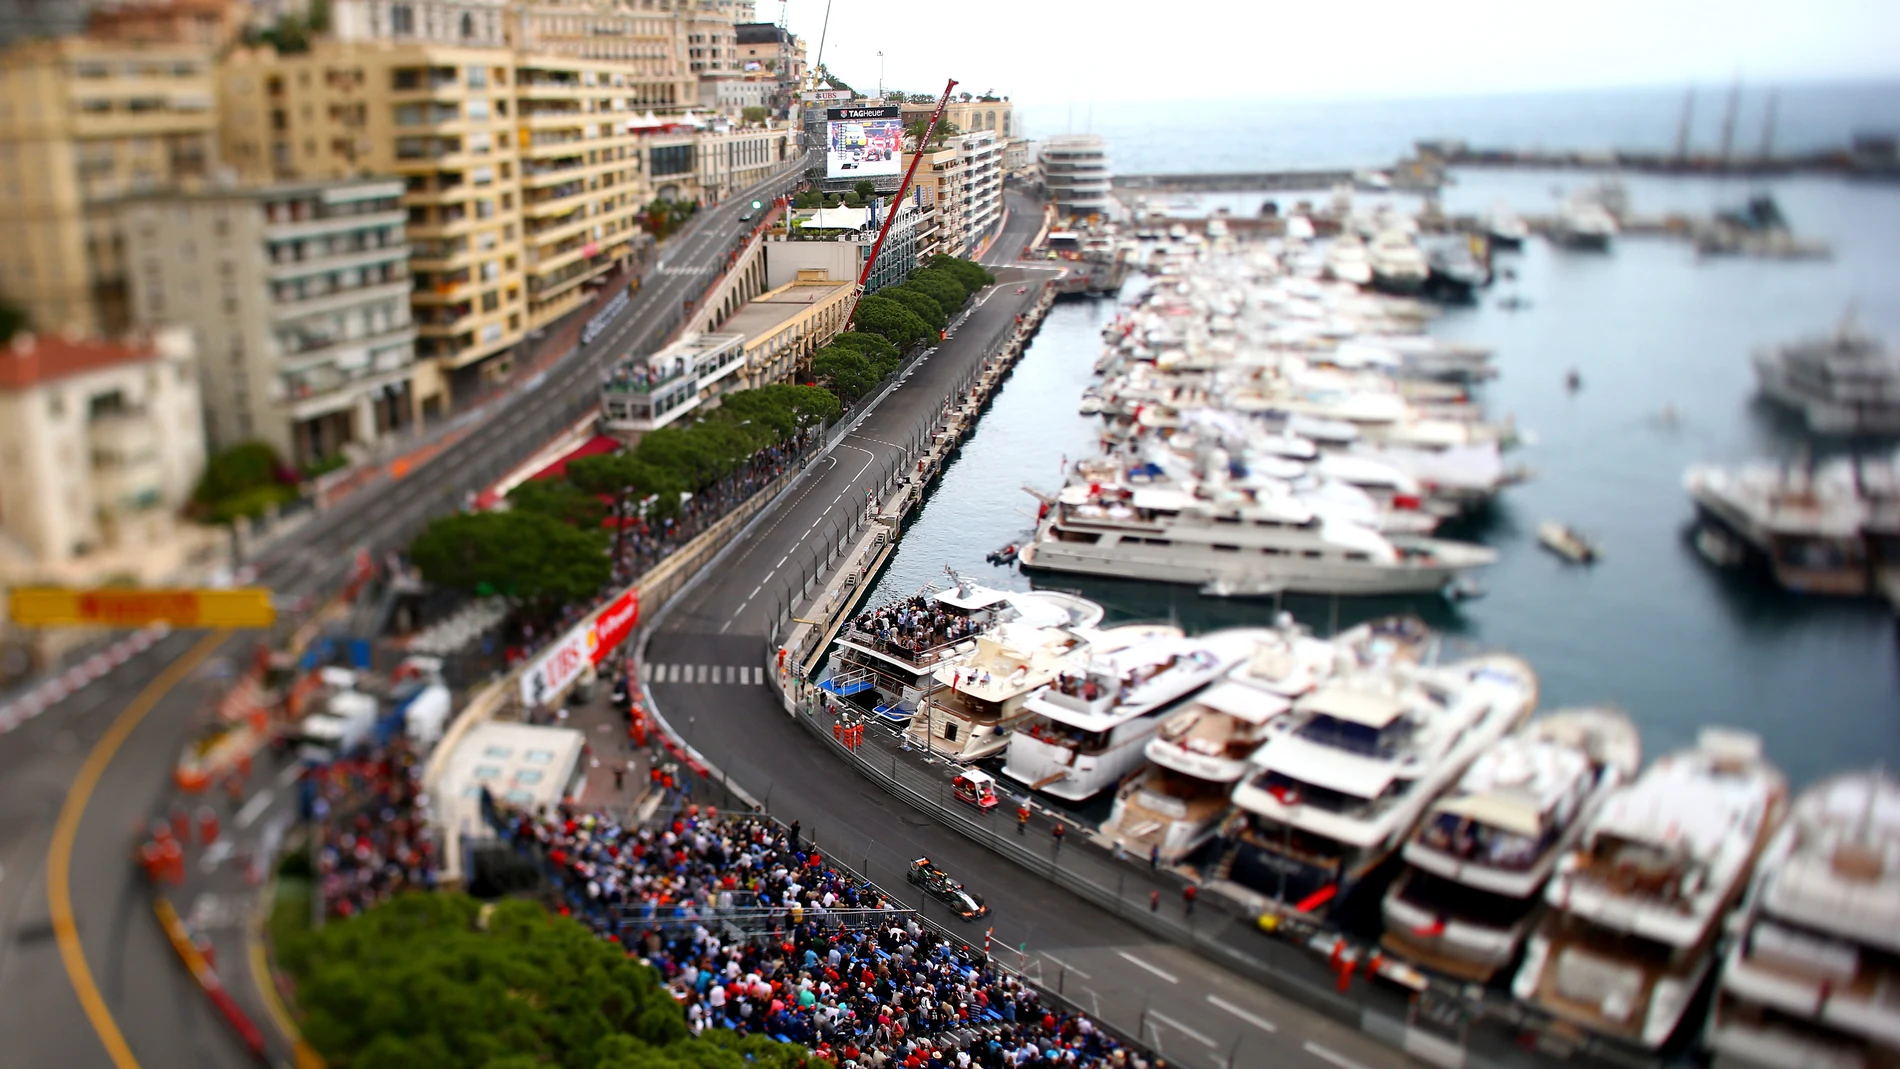 La Fórmula 1 en Mónaco